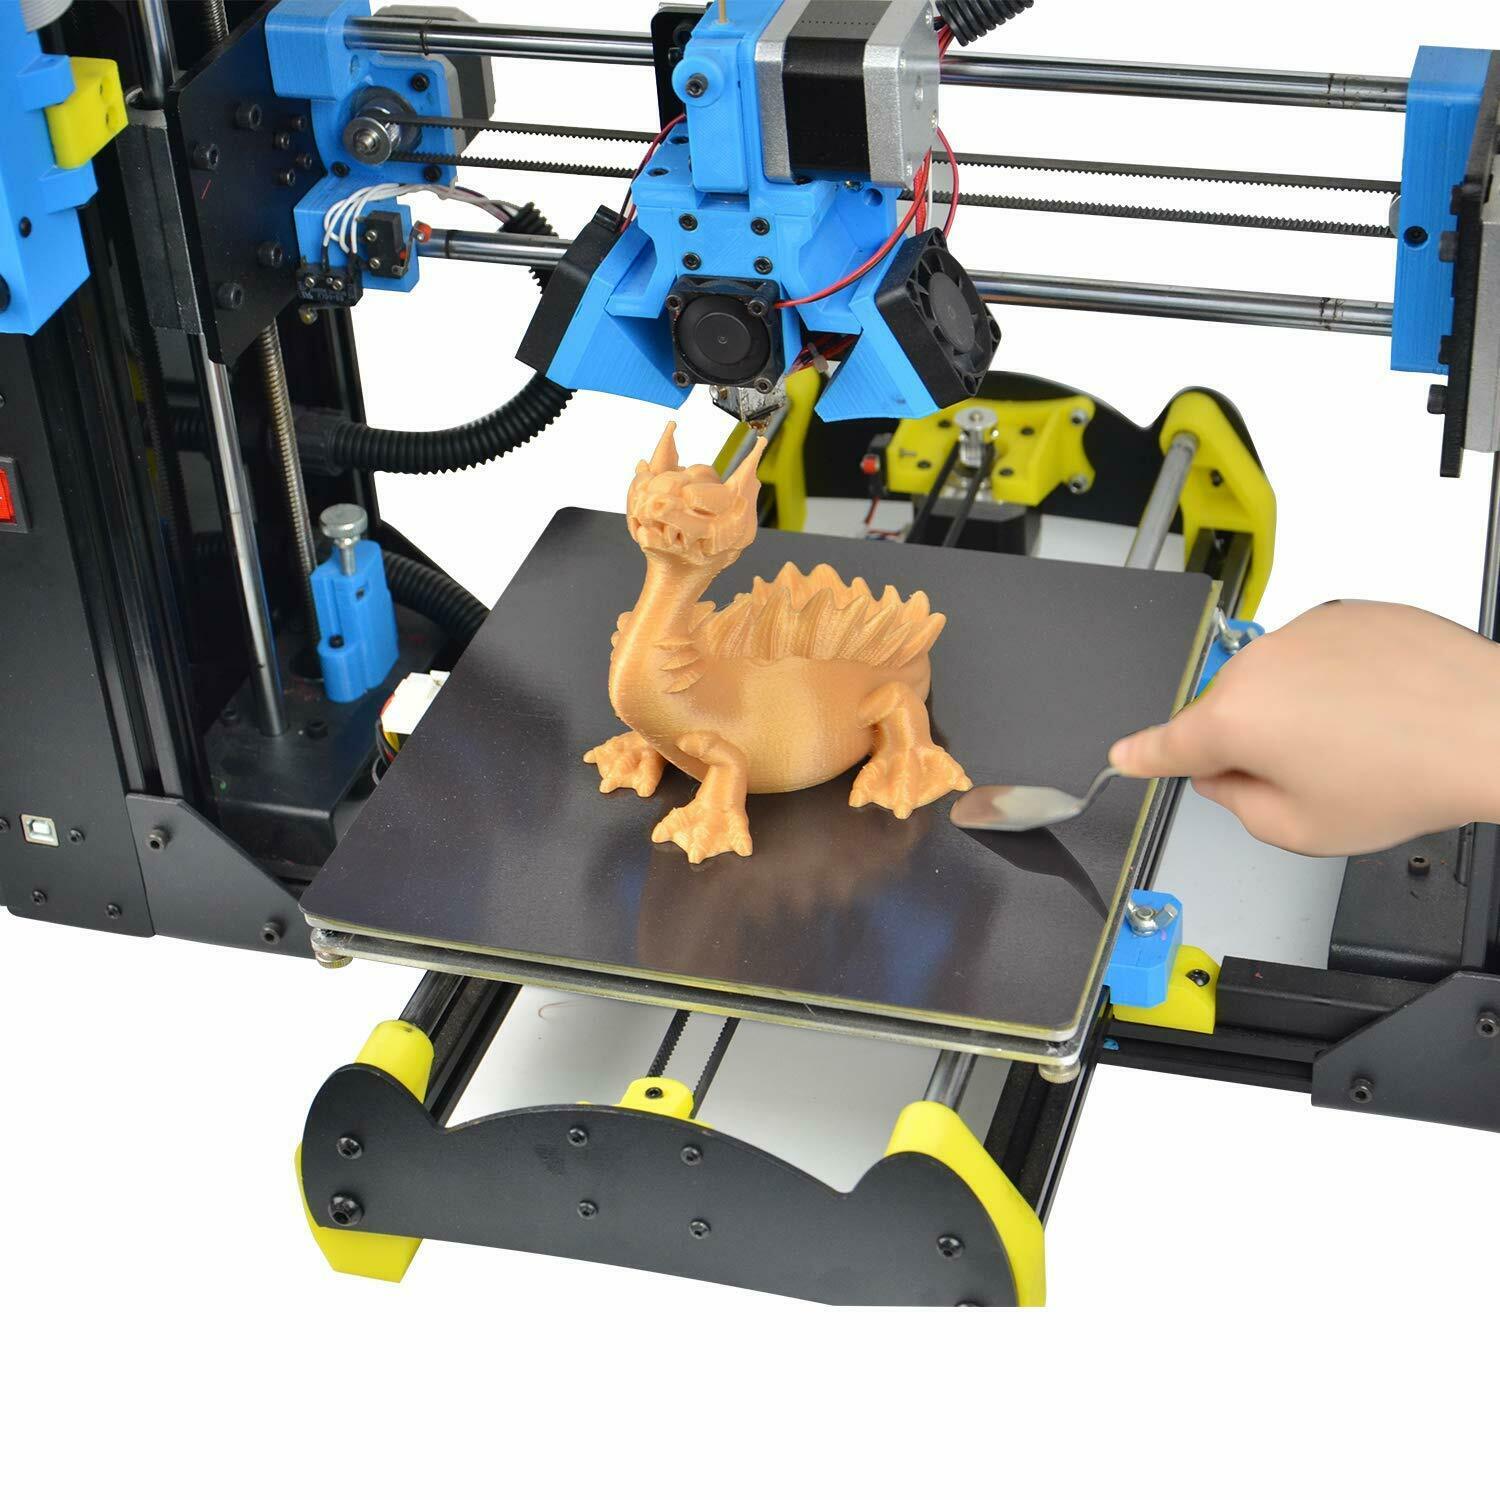 34Pcs MK10 3D Printer Accessories Kit Essential Tools for 3D Printer Enthusiasts